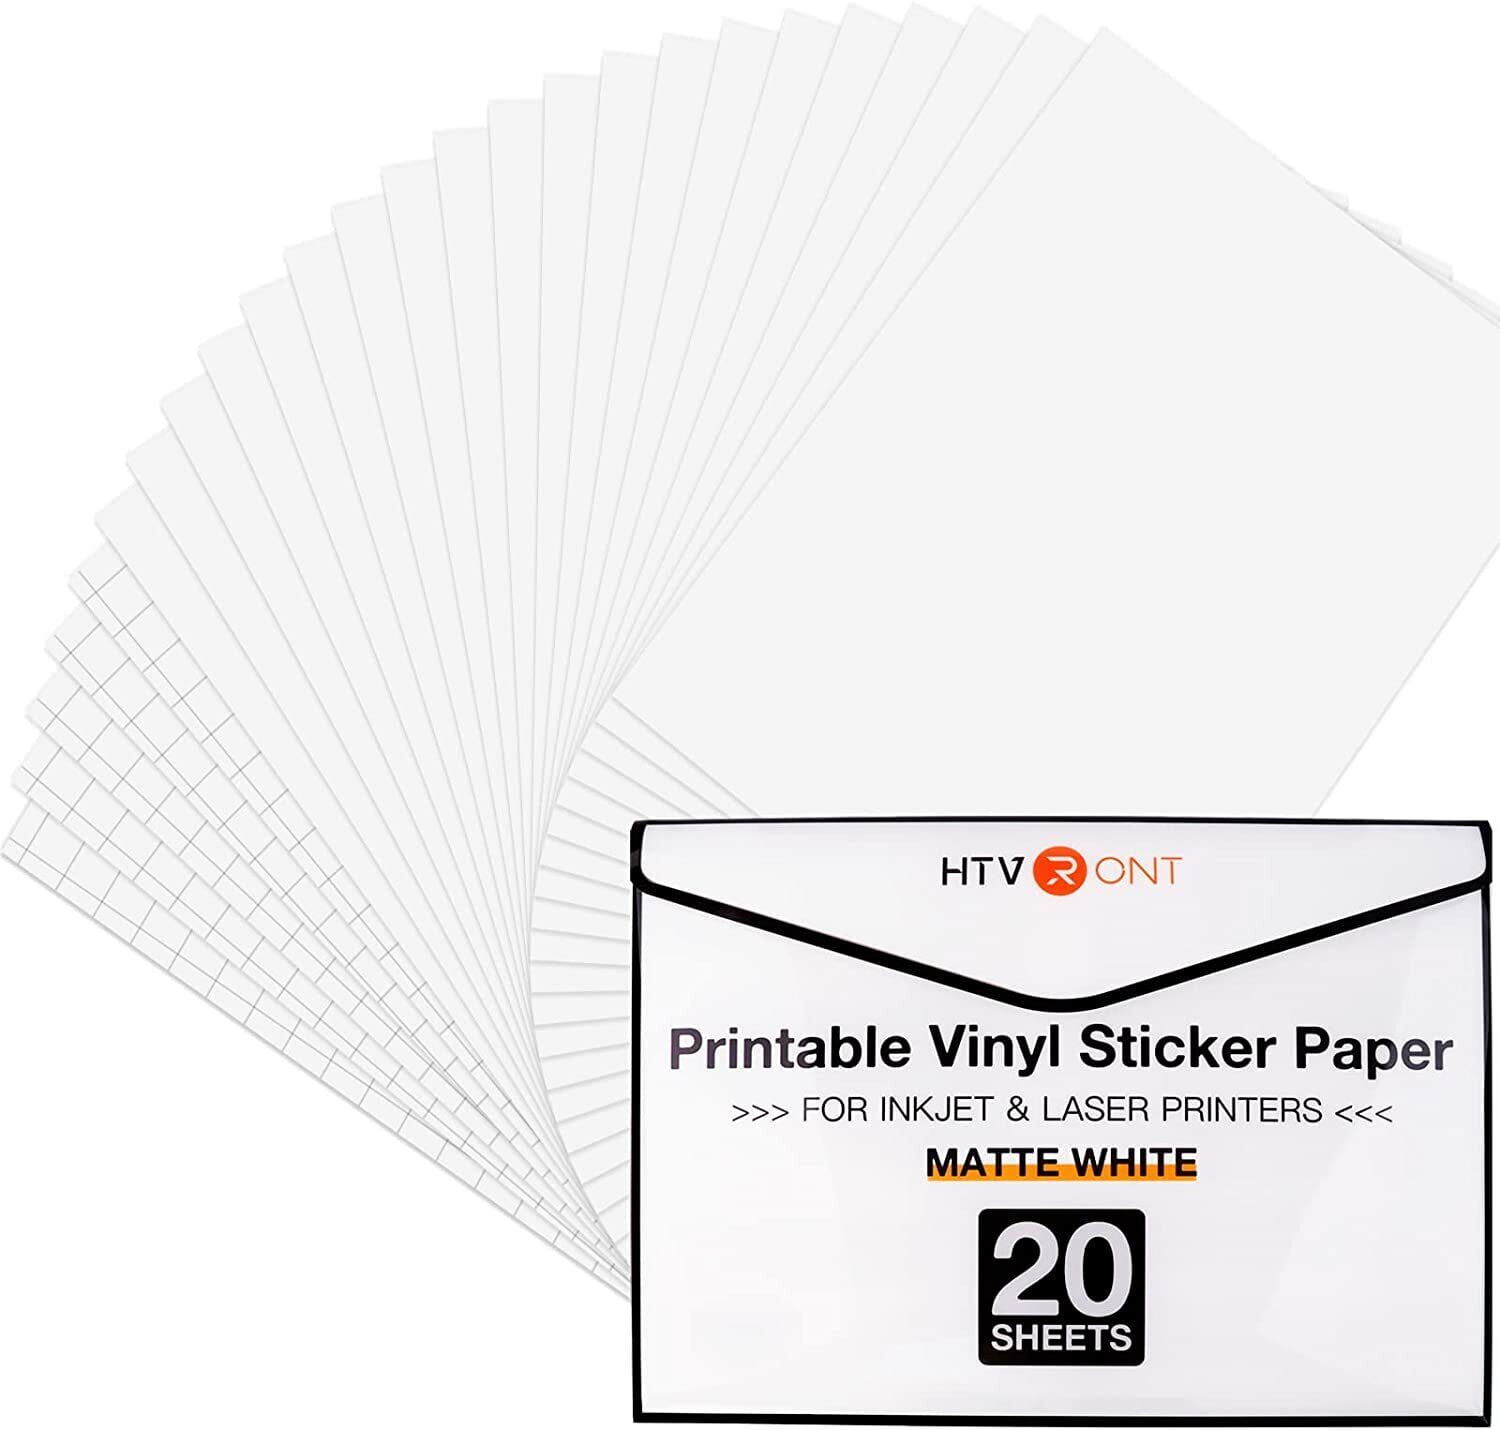 PREMIUM PRINTABLE VINYL Sticker Paper for Inkjet Printer and Laser - 50  White $48.20 - PicClick